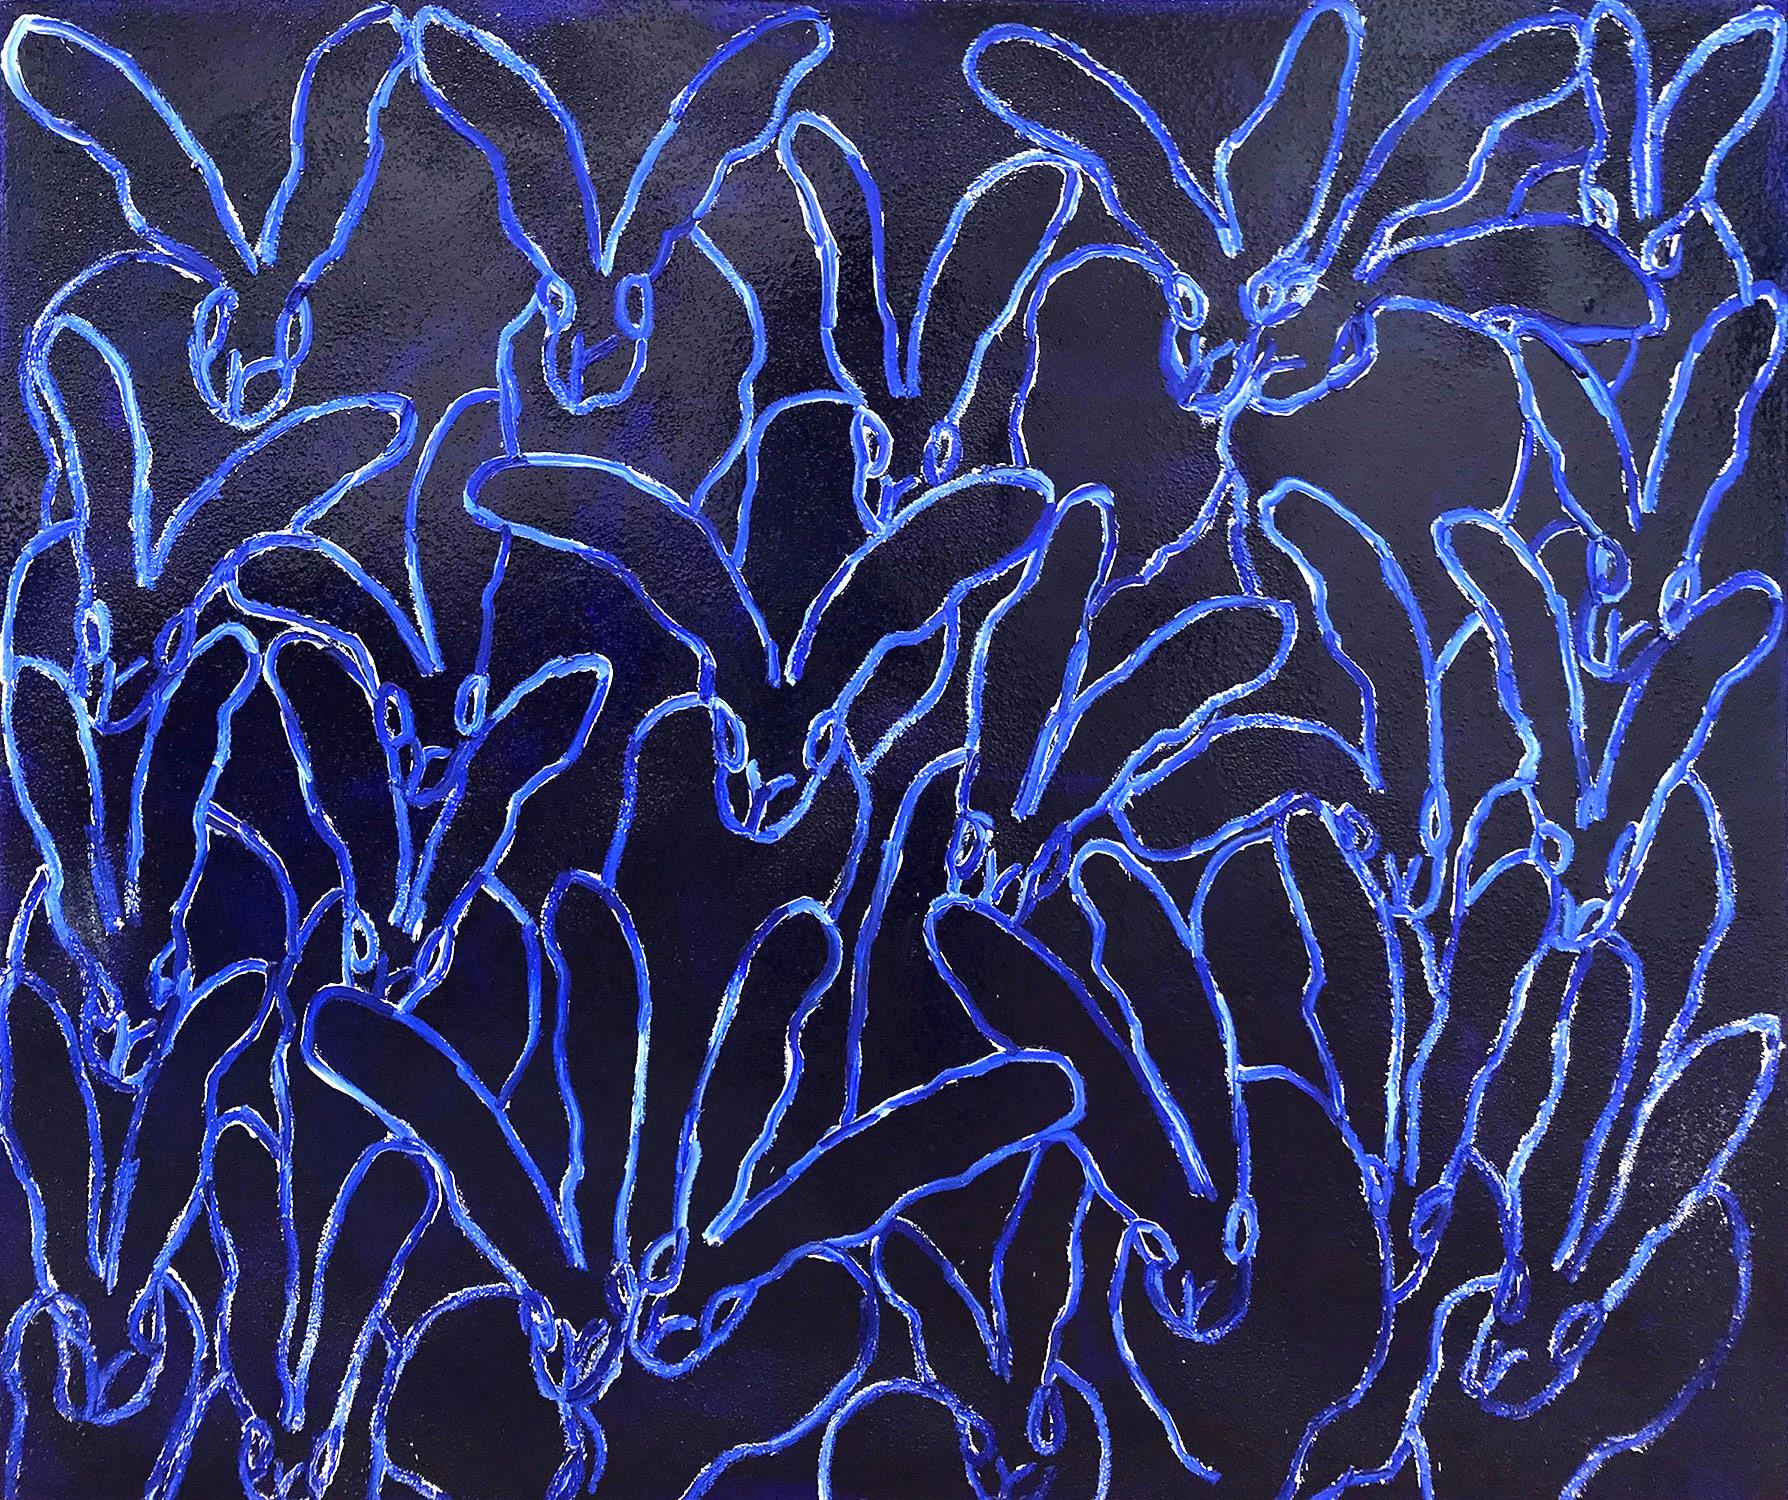 Hunt Slonem Abstract Painting - Blue Tanzania (Diamond Dust Bunnies on Ultramarine Blue)